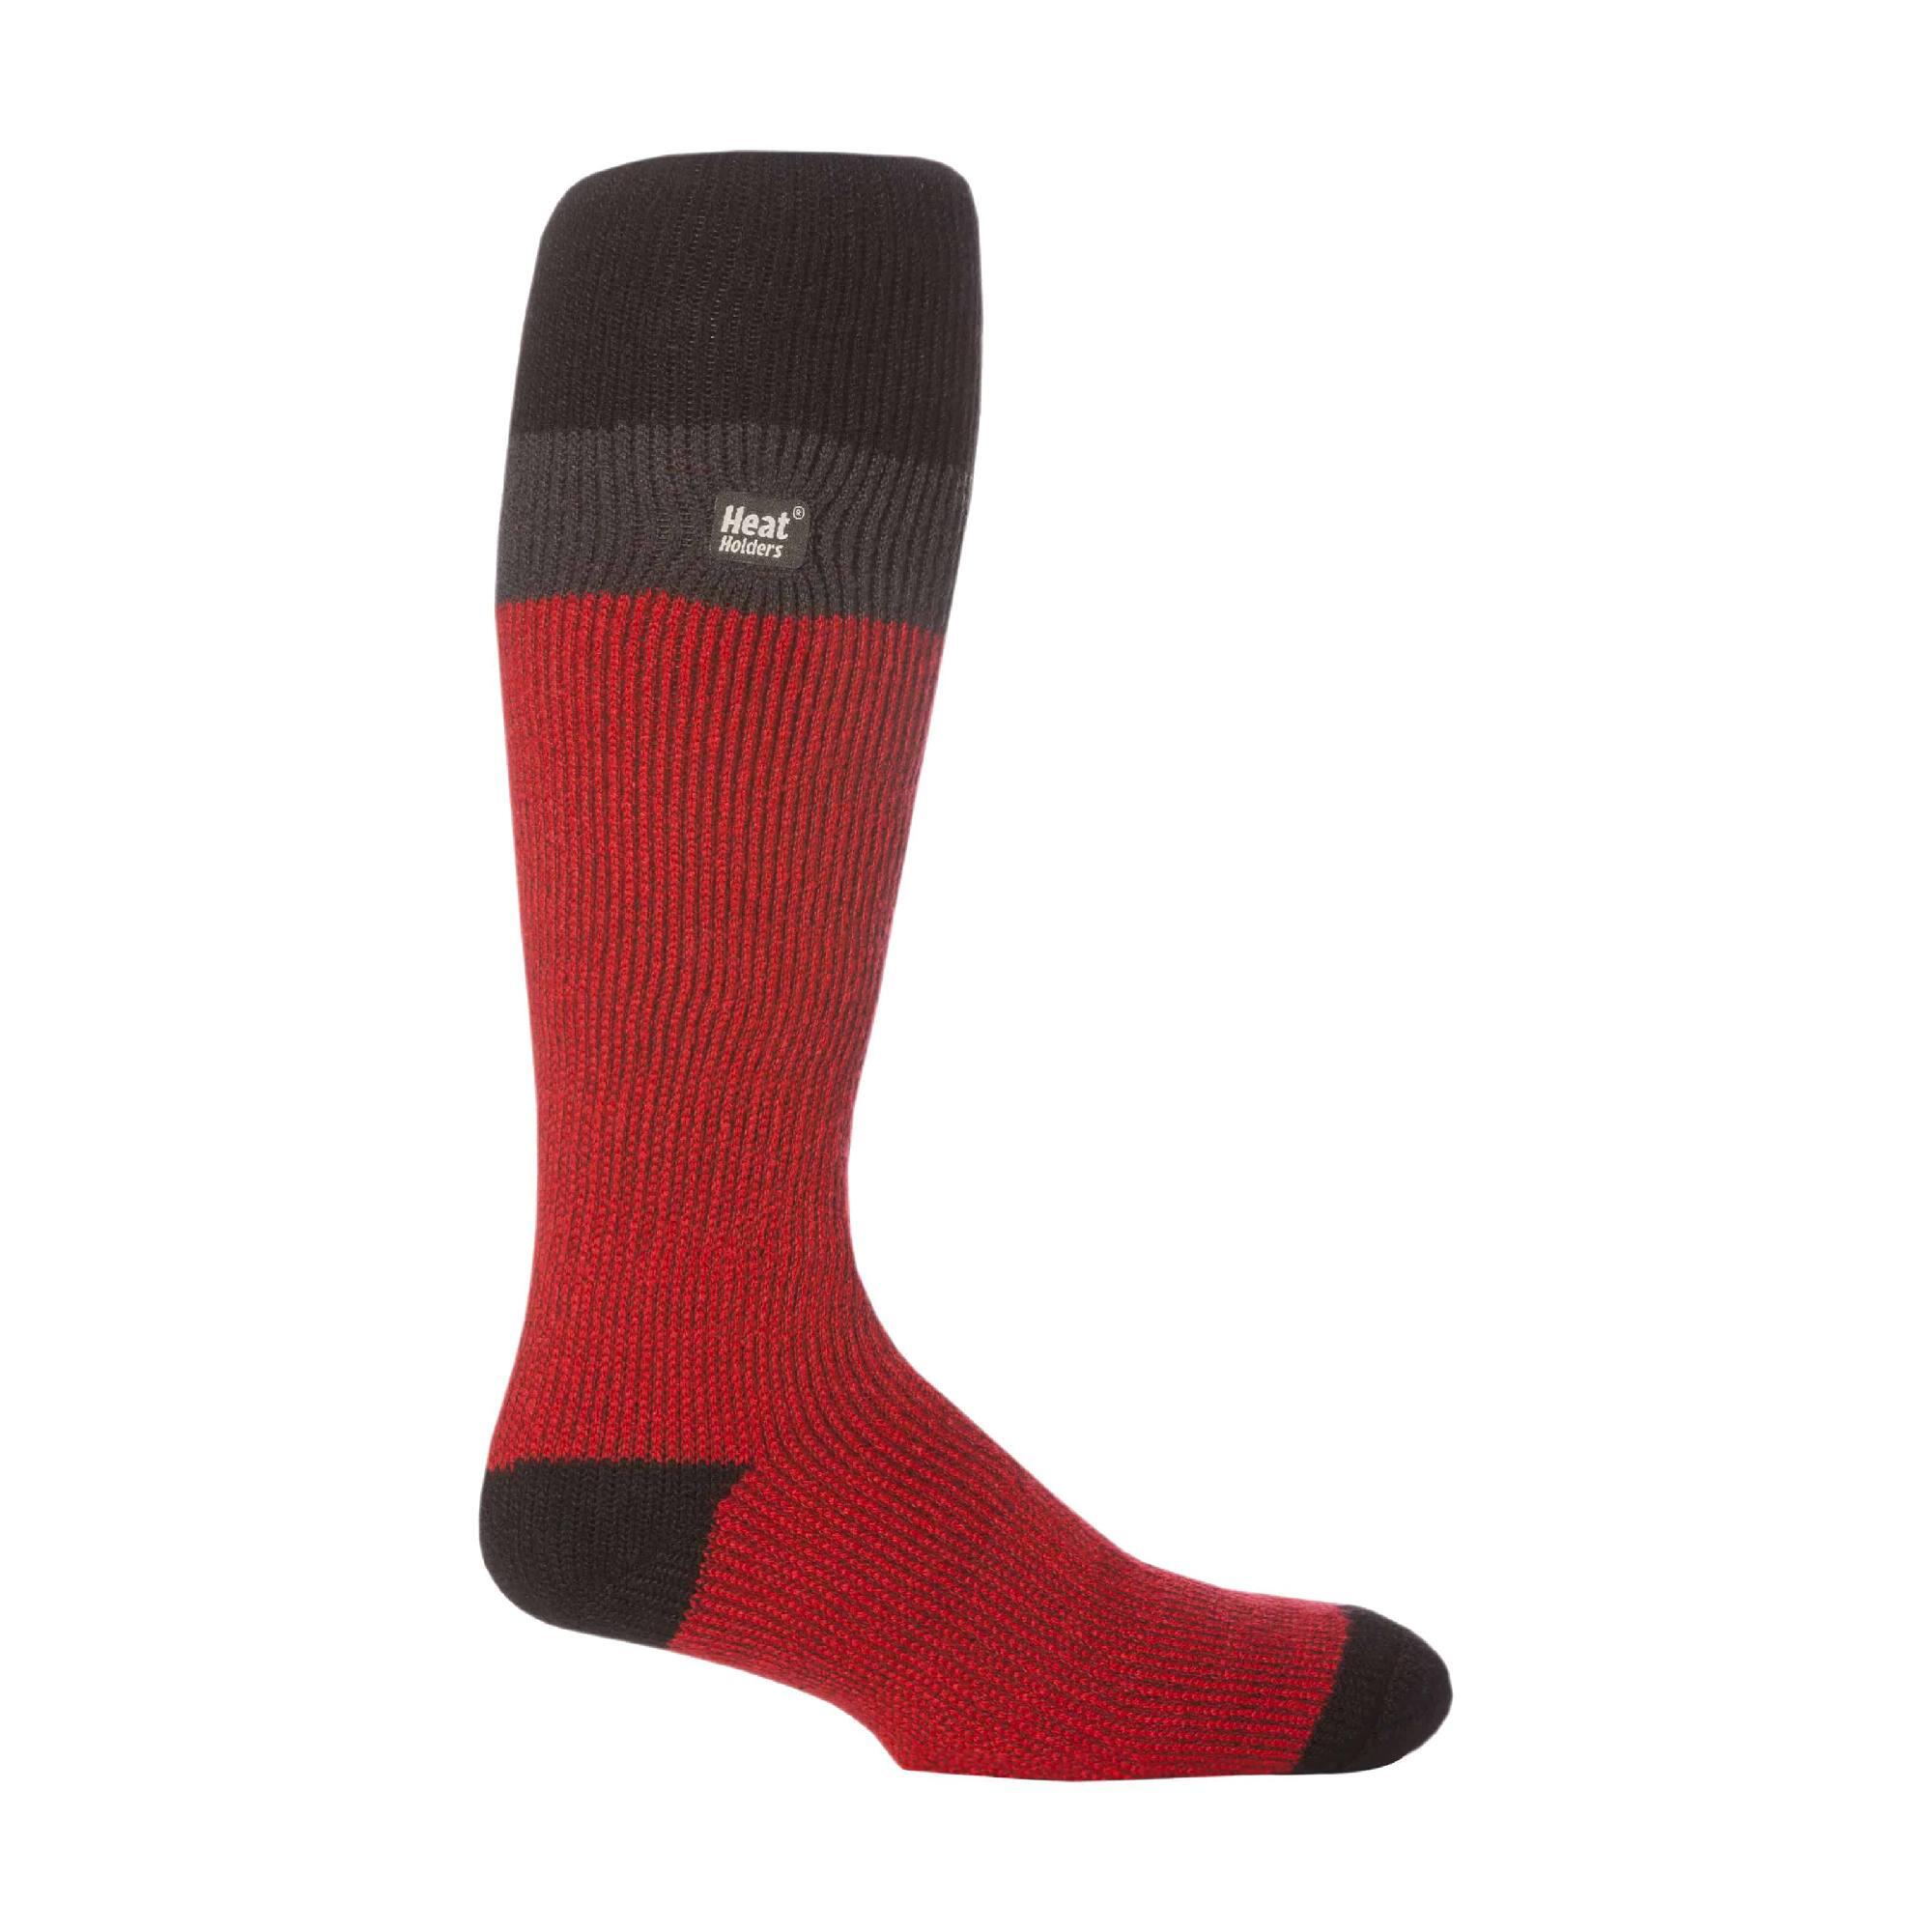 HEAT HOLDERS Mens Thermal Extra Long 2.3 TOG Winter Knee High Ski Socks